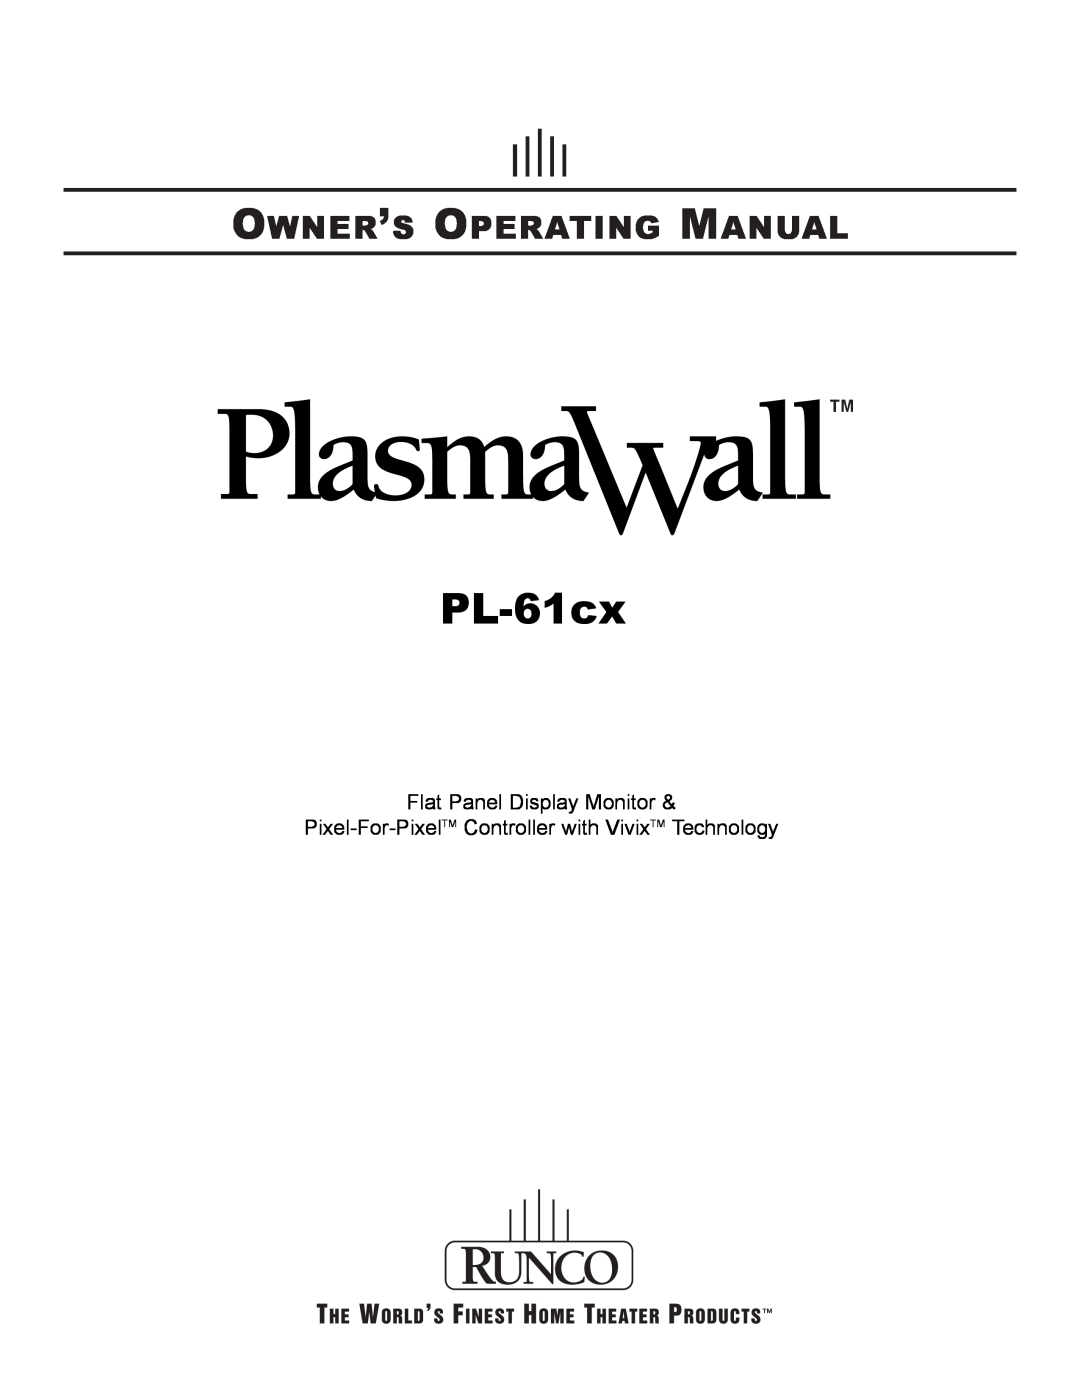 Runco PL-61CX manual PL-61cx, Owner’S Operating Manual 